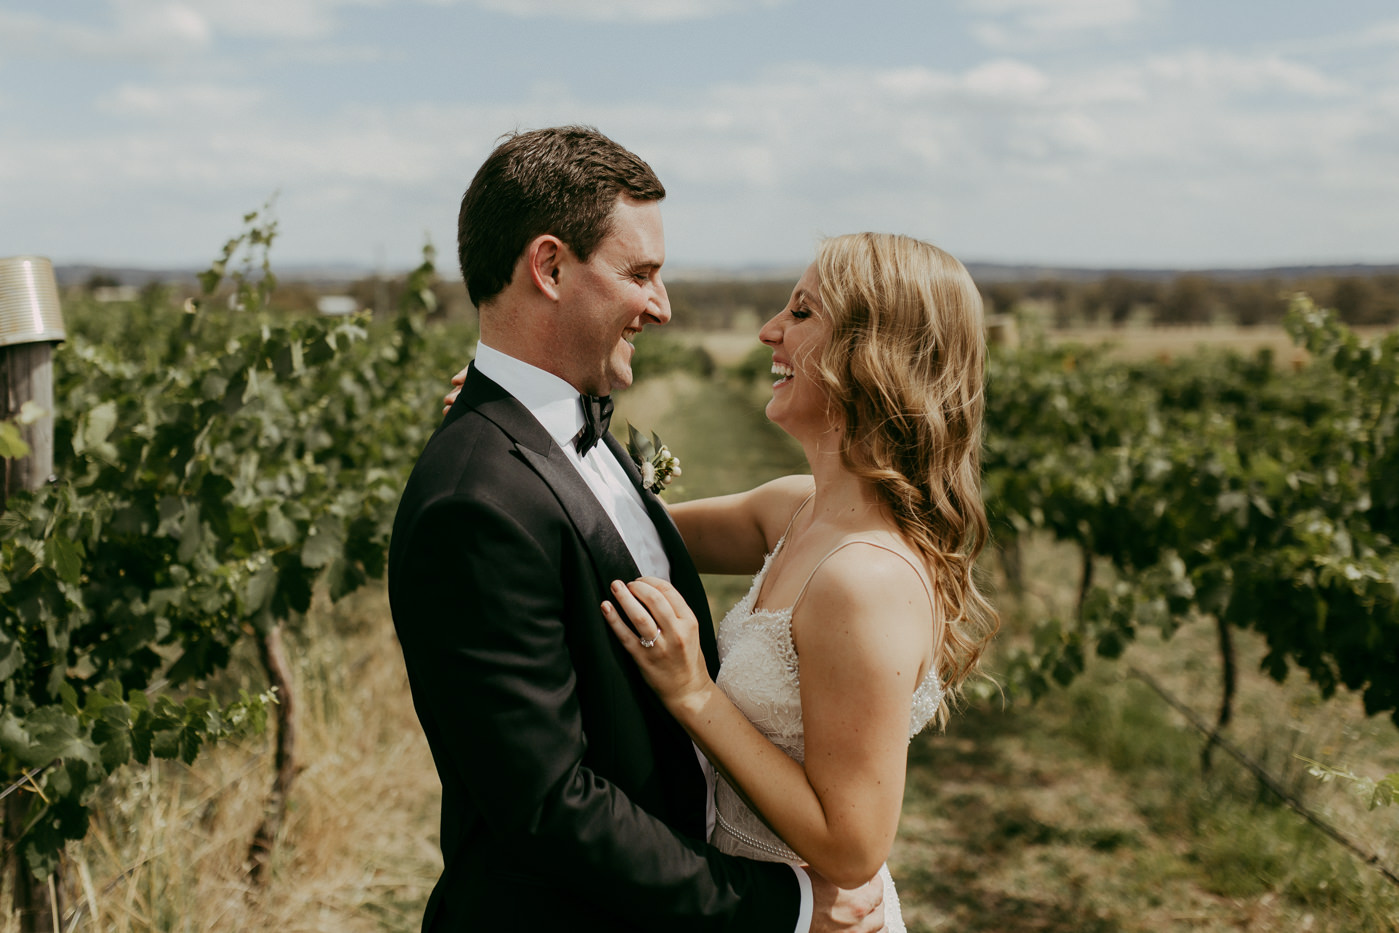 Anthony & Eliet - Wagga Wagga Wedding - Country NSW - Samantha Heather Photography-71.jpg